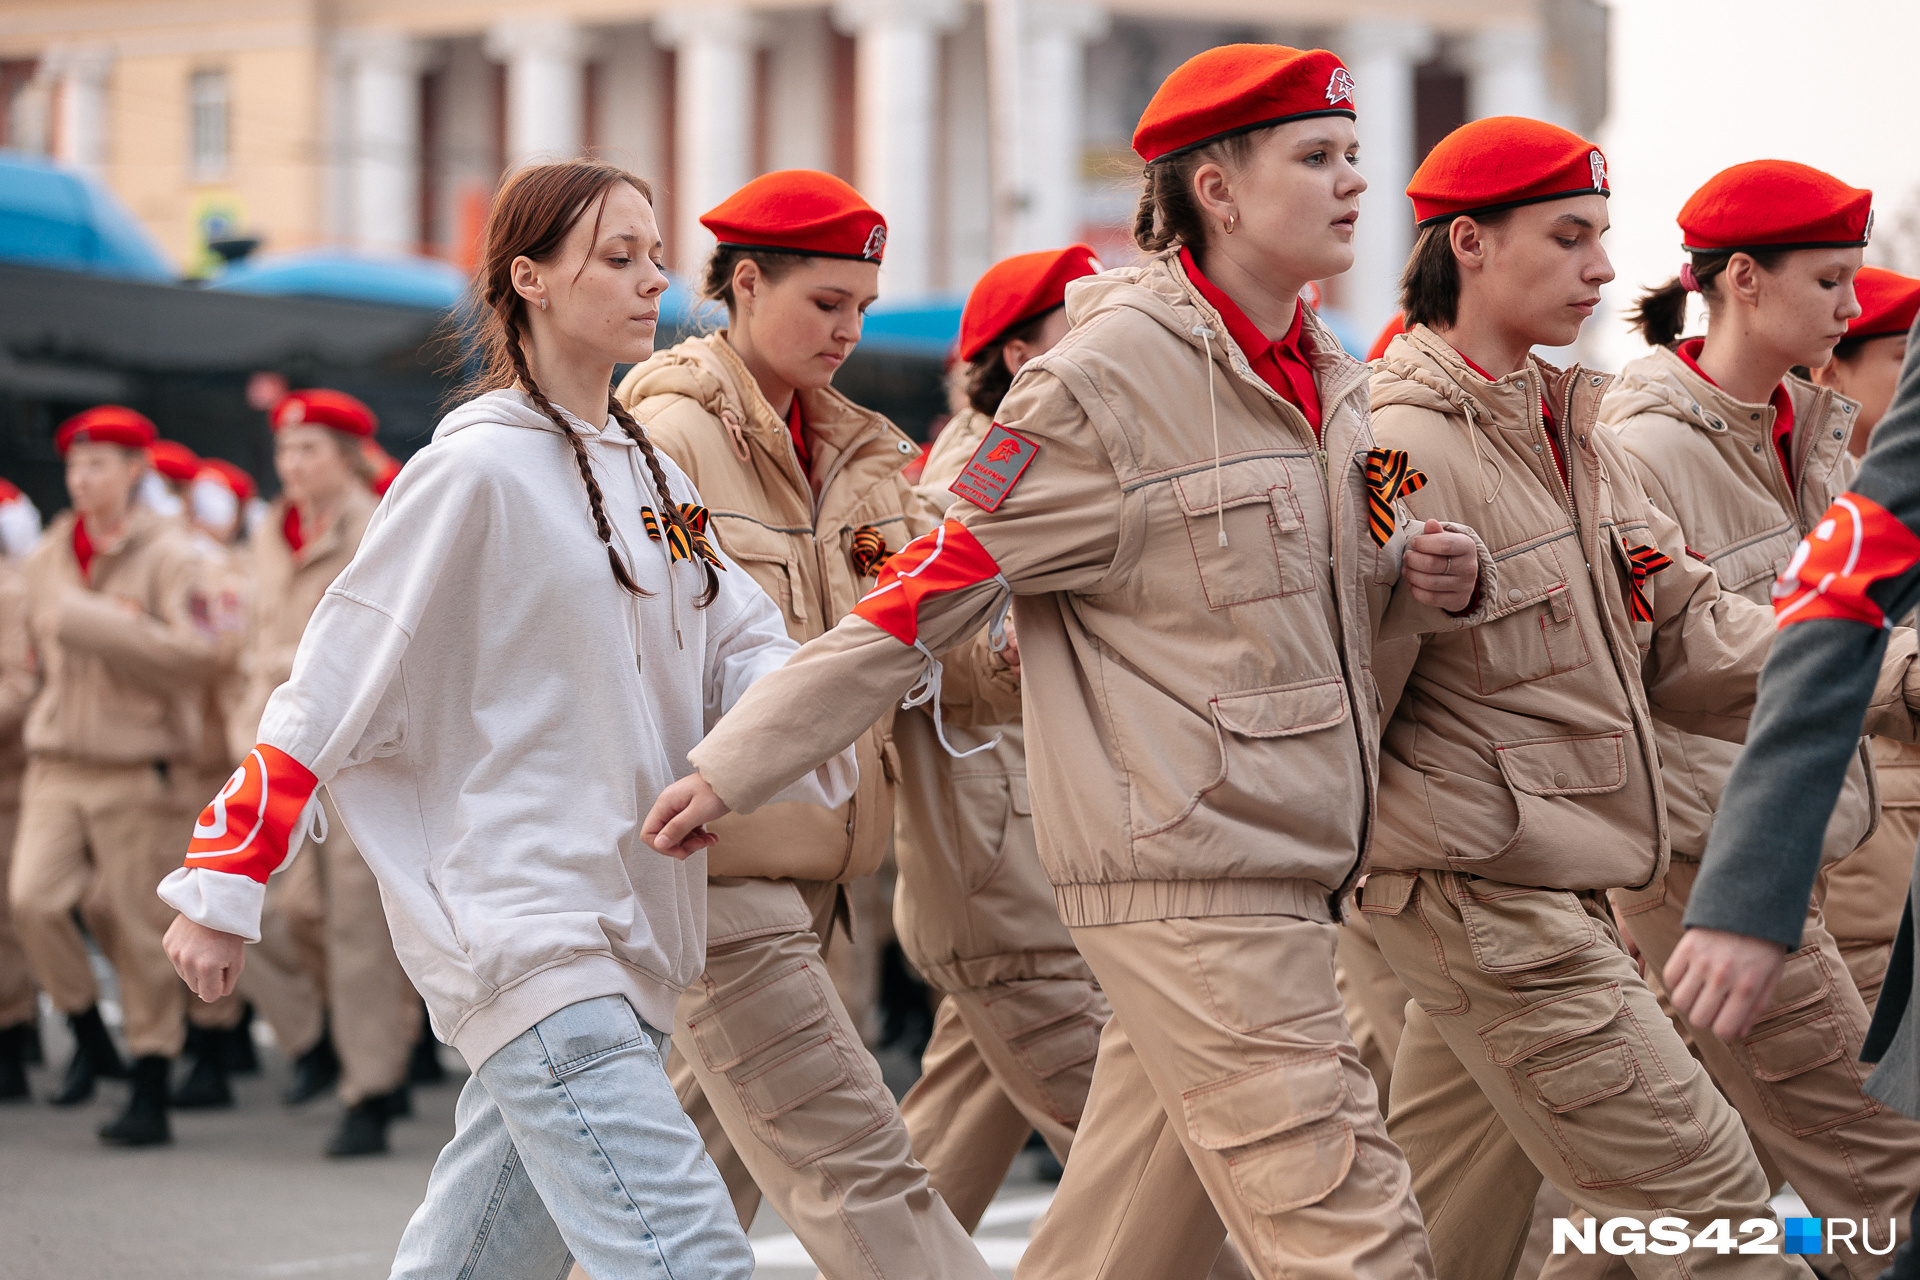 Будет ли парад 9 в москве. Девушки на параде. Девушки на параде Победы. Девушки на параде 9 мая. На 9 мая одежда парад для девушек.